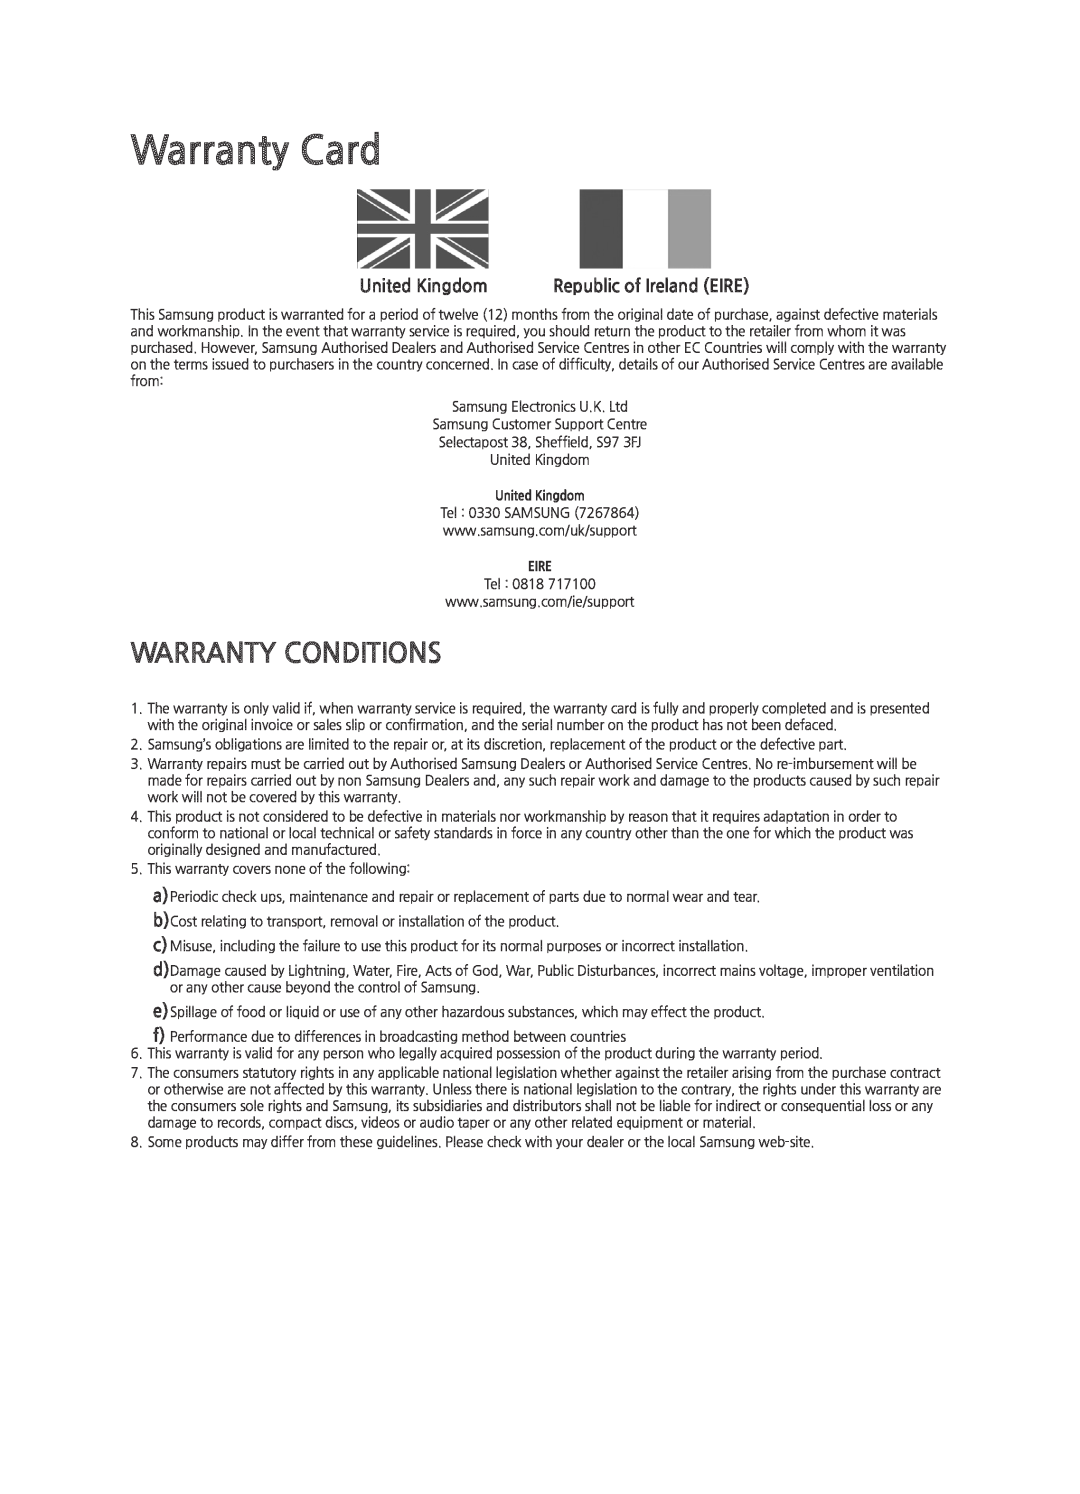 Samsung UE88JS9500TXZF, UE65JS9500TXZF Warranty Card, Warranty Conditions, Republic of Ireland EIRE, United Kingdom, Eire 